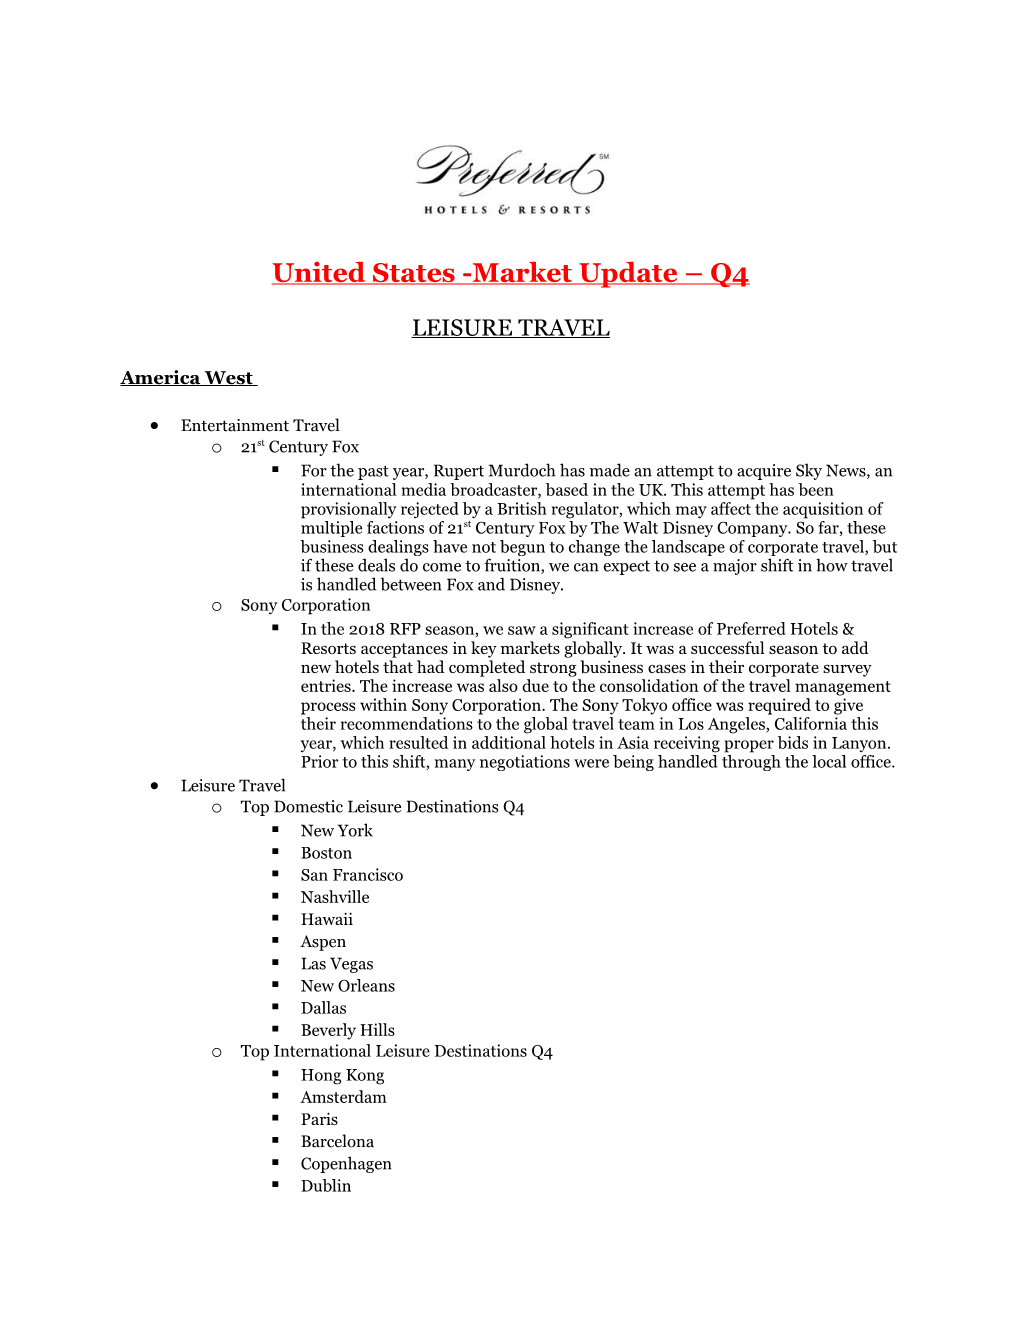 United States-Market Update Q4